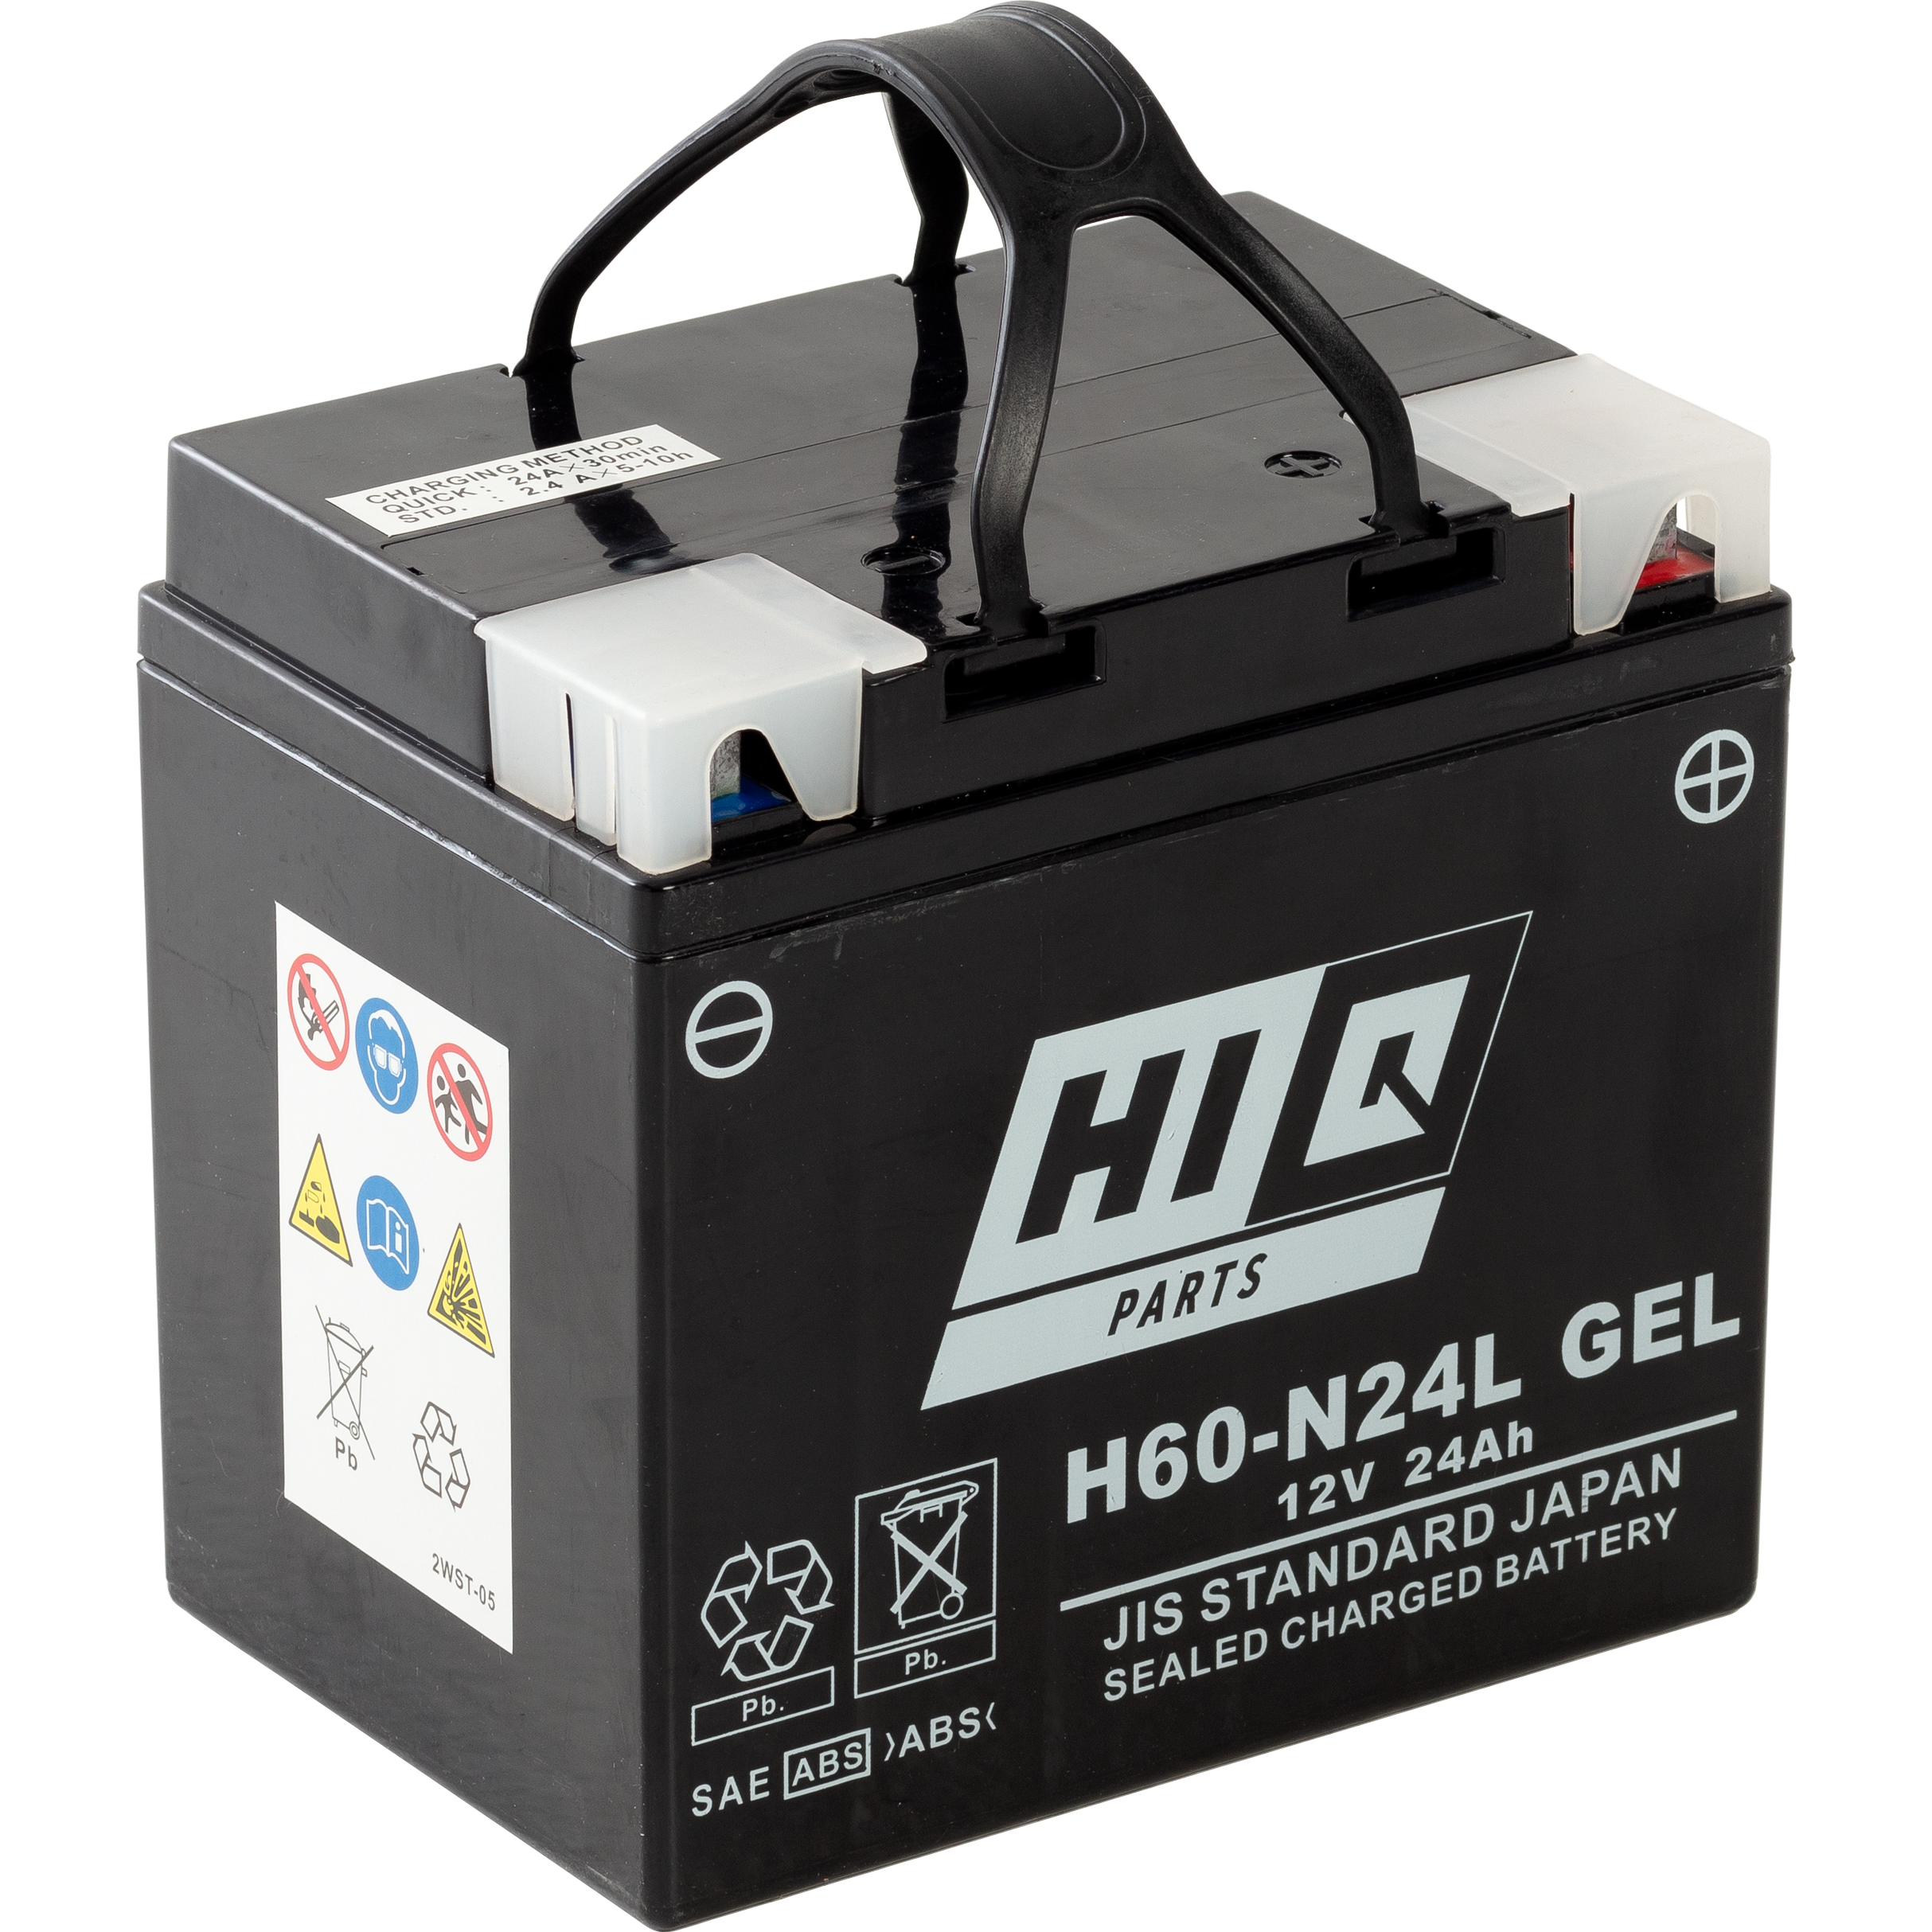 Hi-Q Batterie AGM Gel geschlossen H60-N24L, 12V, 24Ah (Y60-N24L) Neutral  kaufen - POLO Motorrad